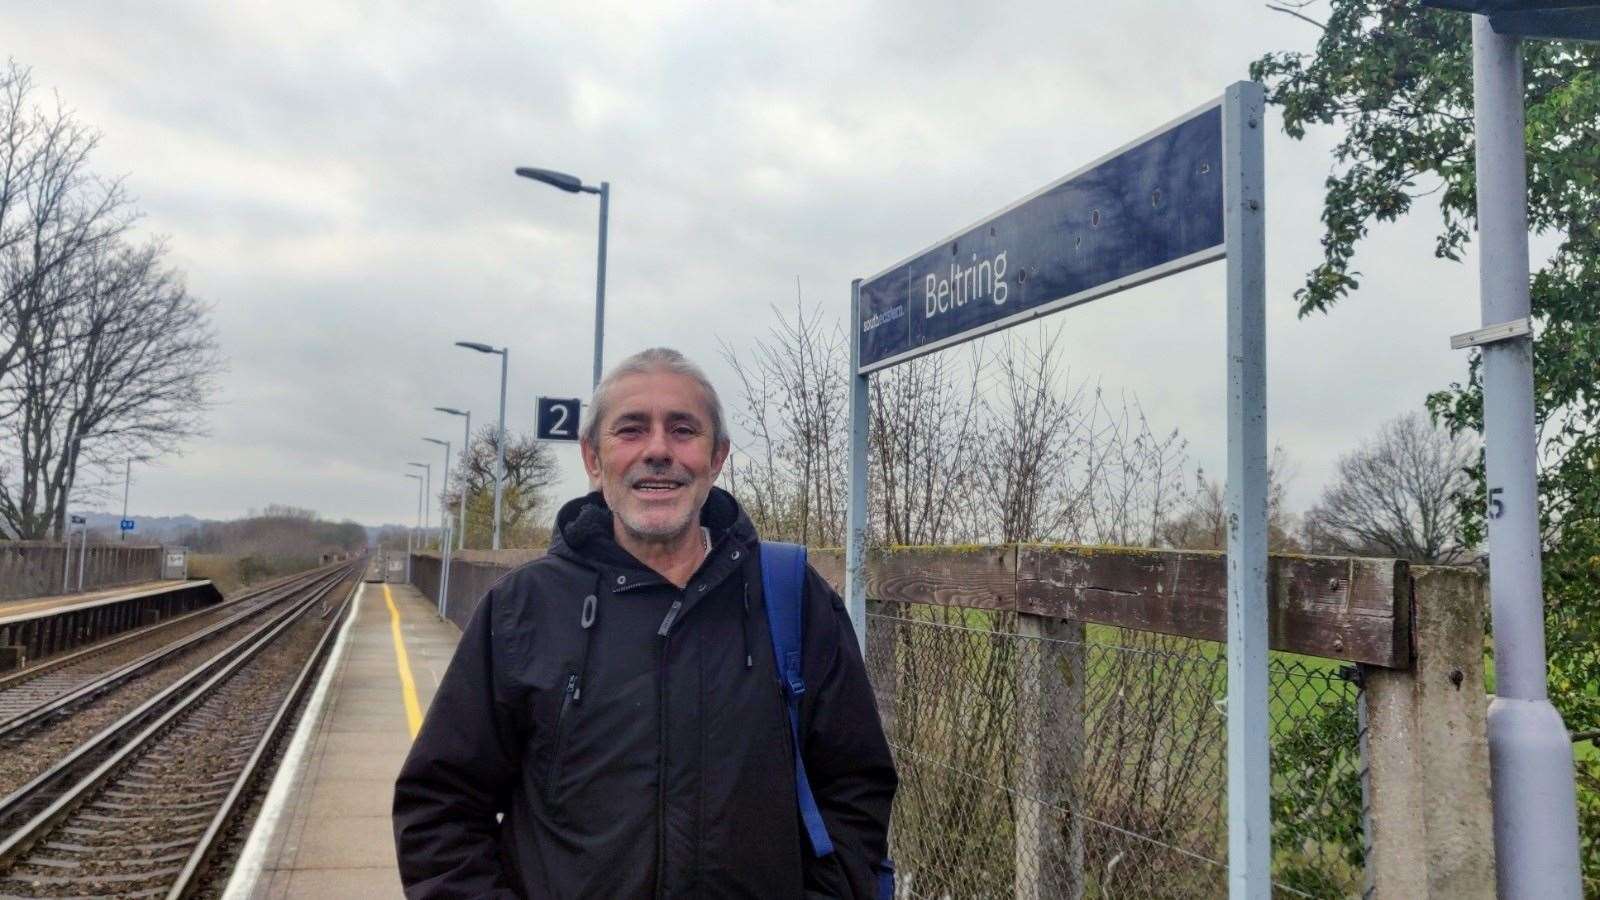 Passenger Manuel Candido at Beltring railway station near Paddock Wood